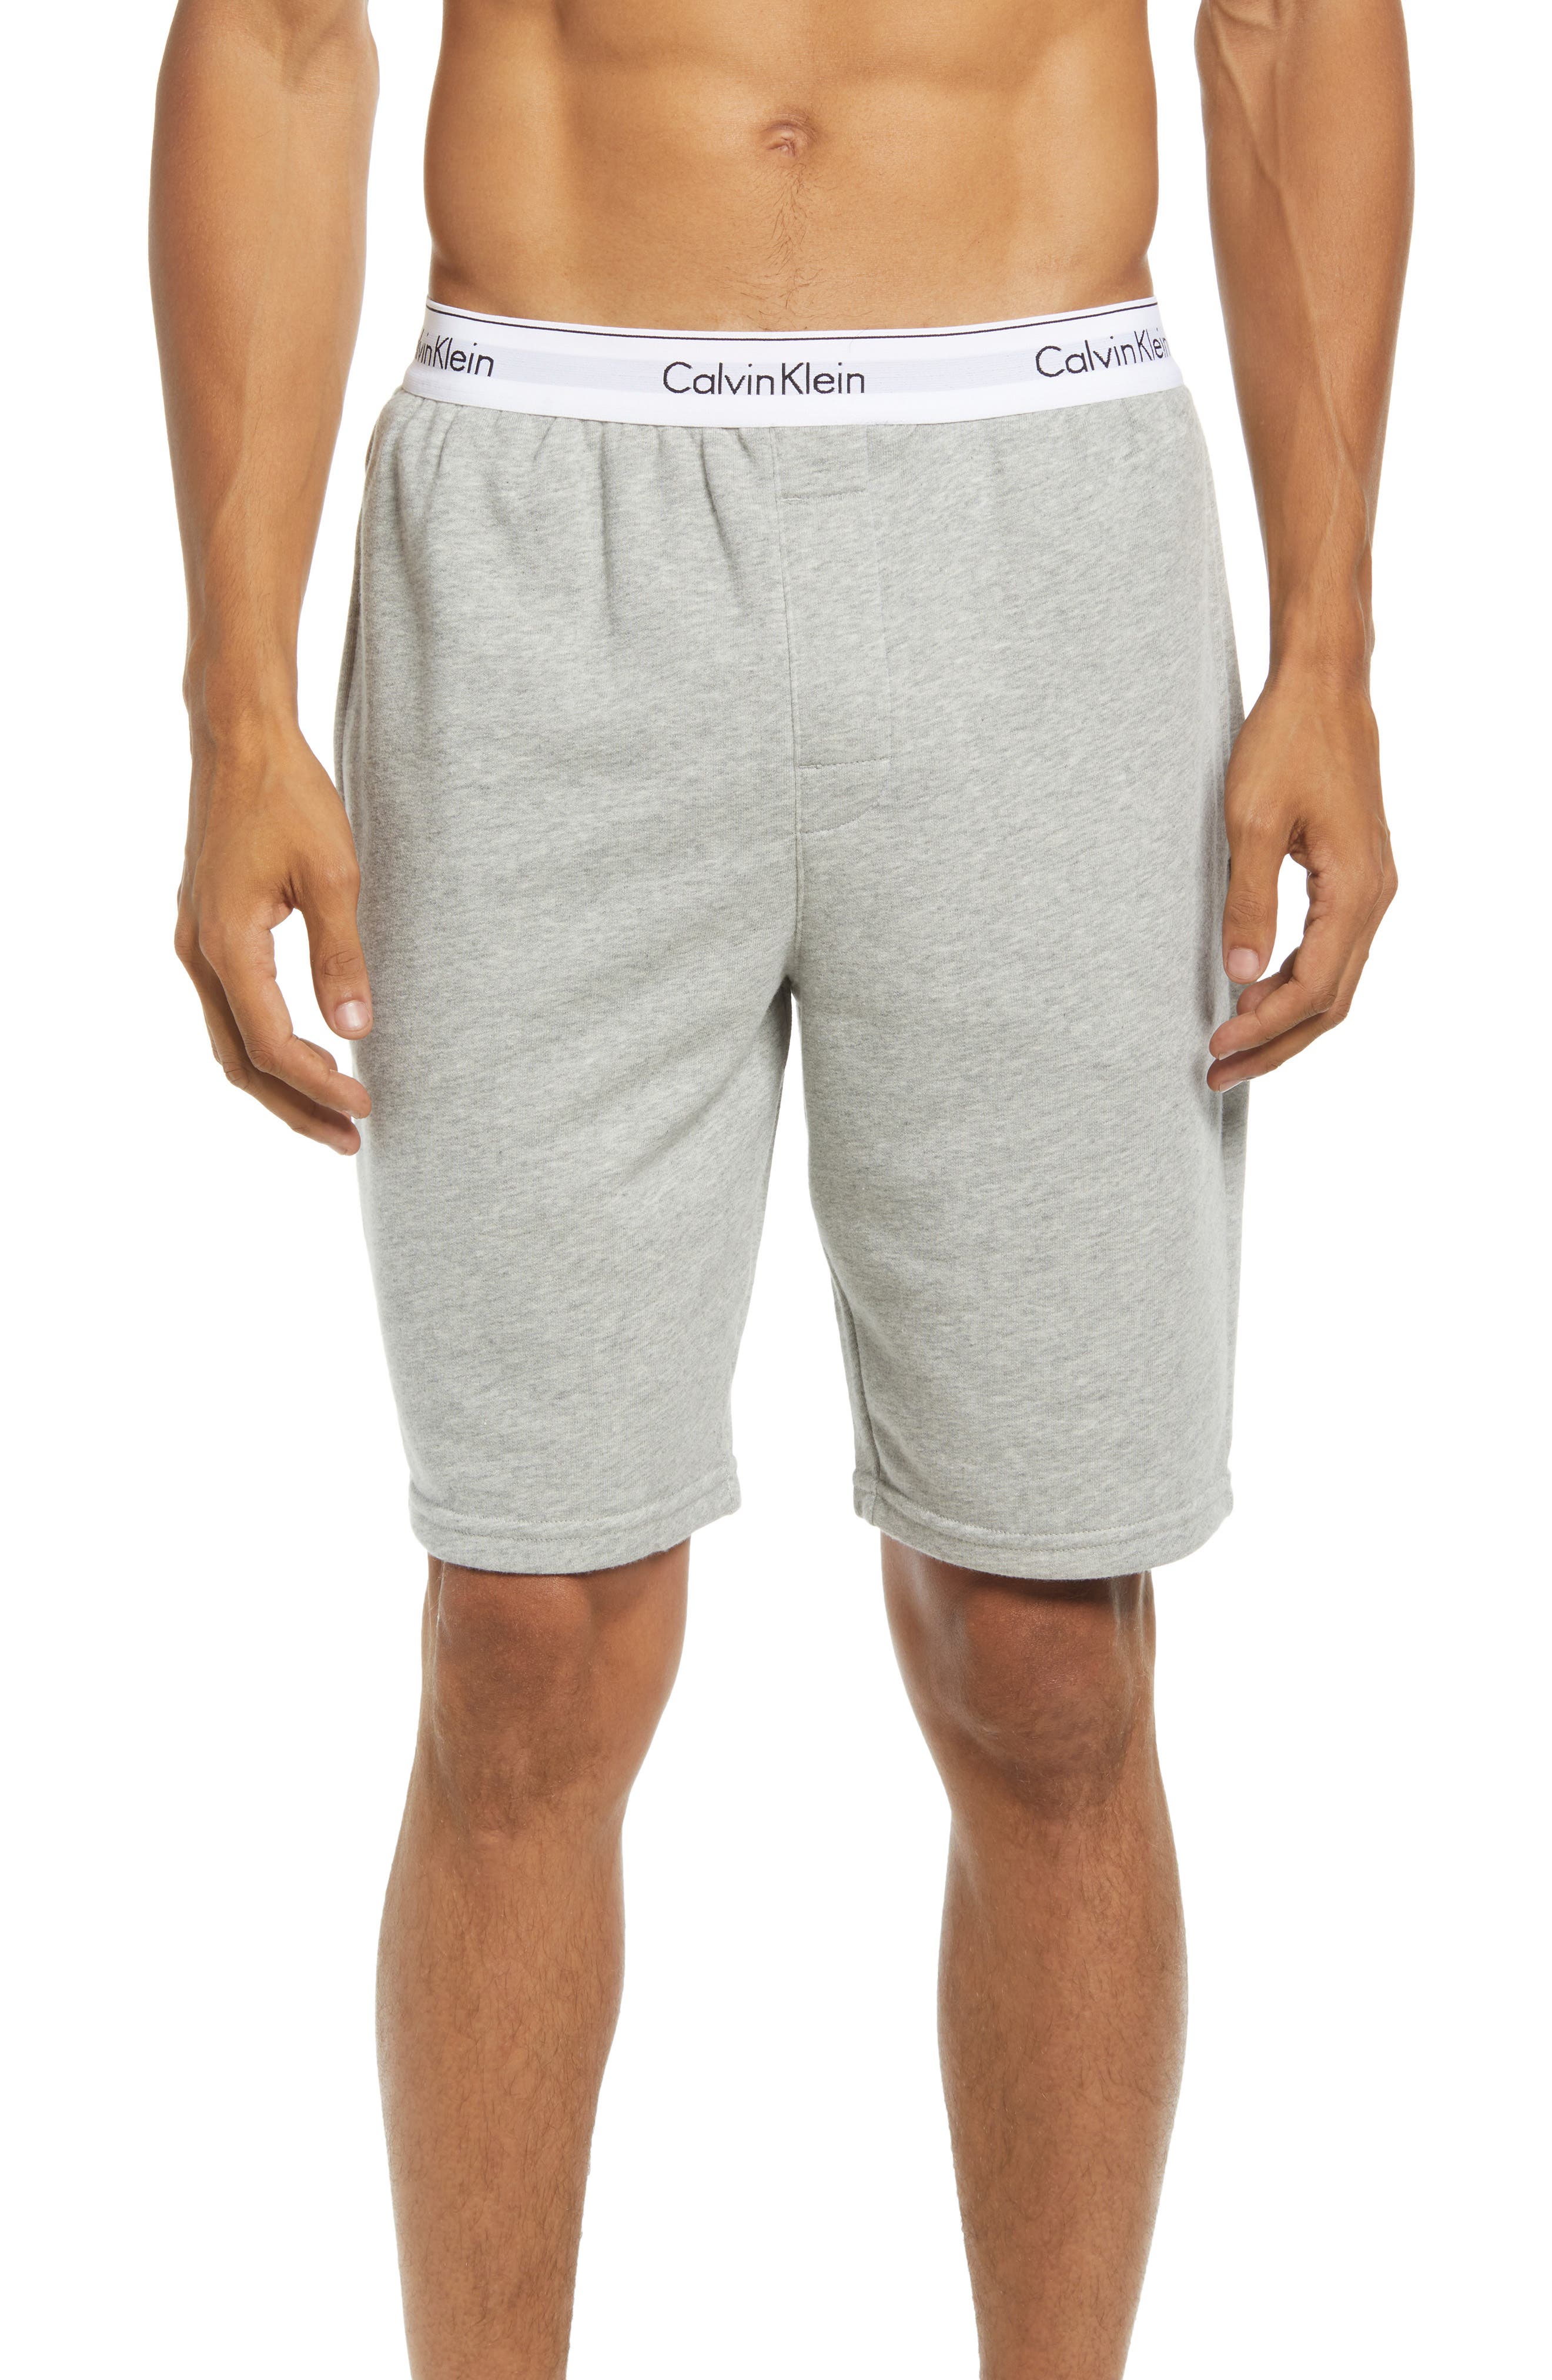 Calvin Klein Pajama Shorts Mens Flash Sales, SAVE 59%.